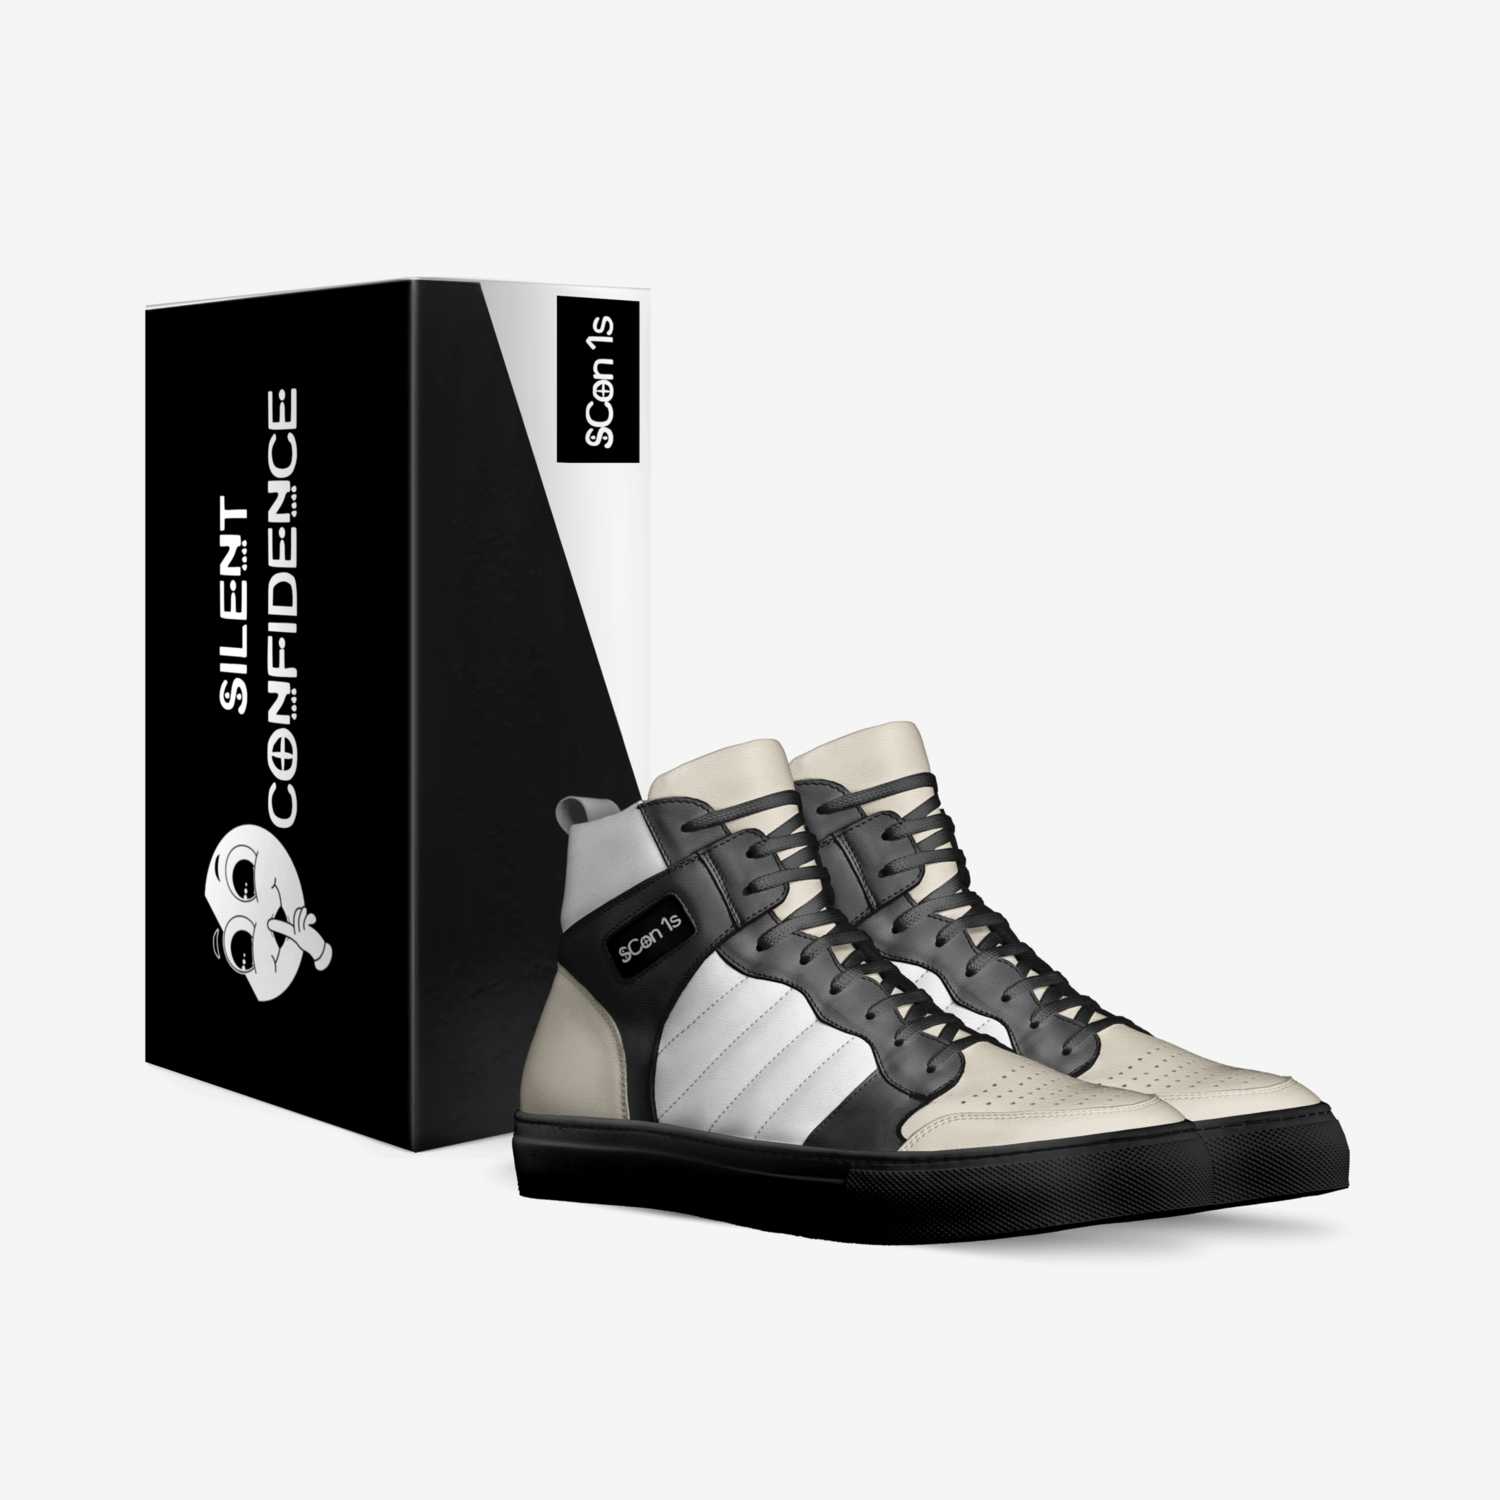 SCon 1s custom made in Italy shoes by Keyshwn Bridgeman-dicks | Box view